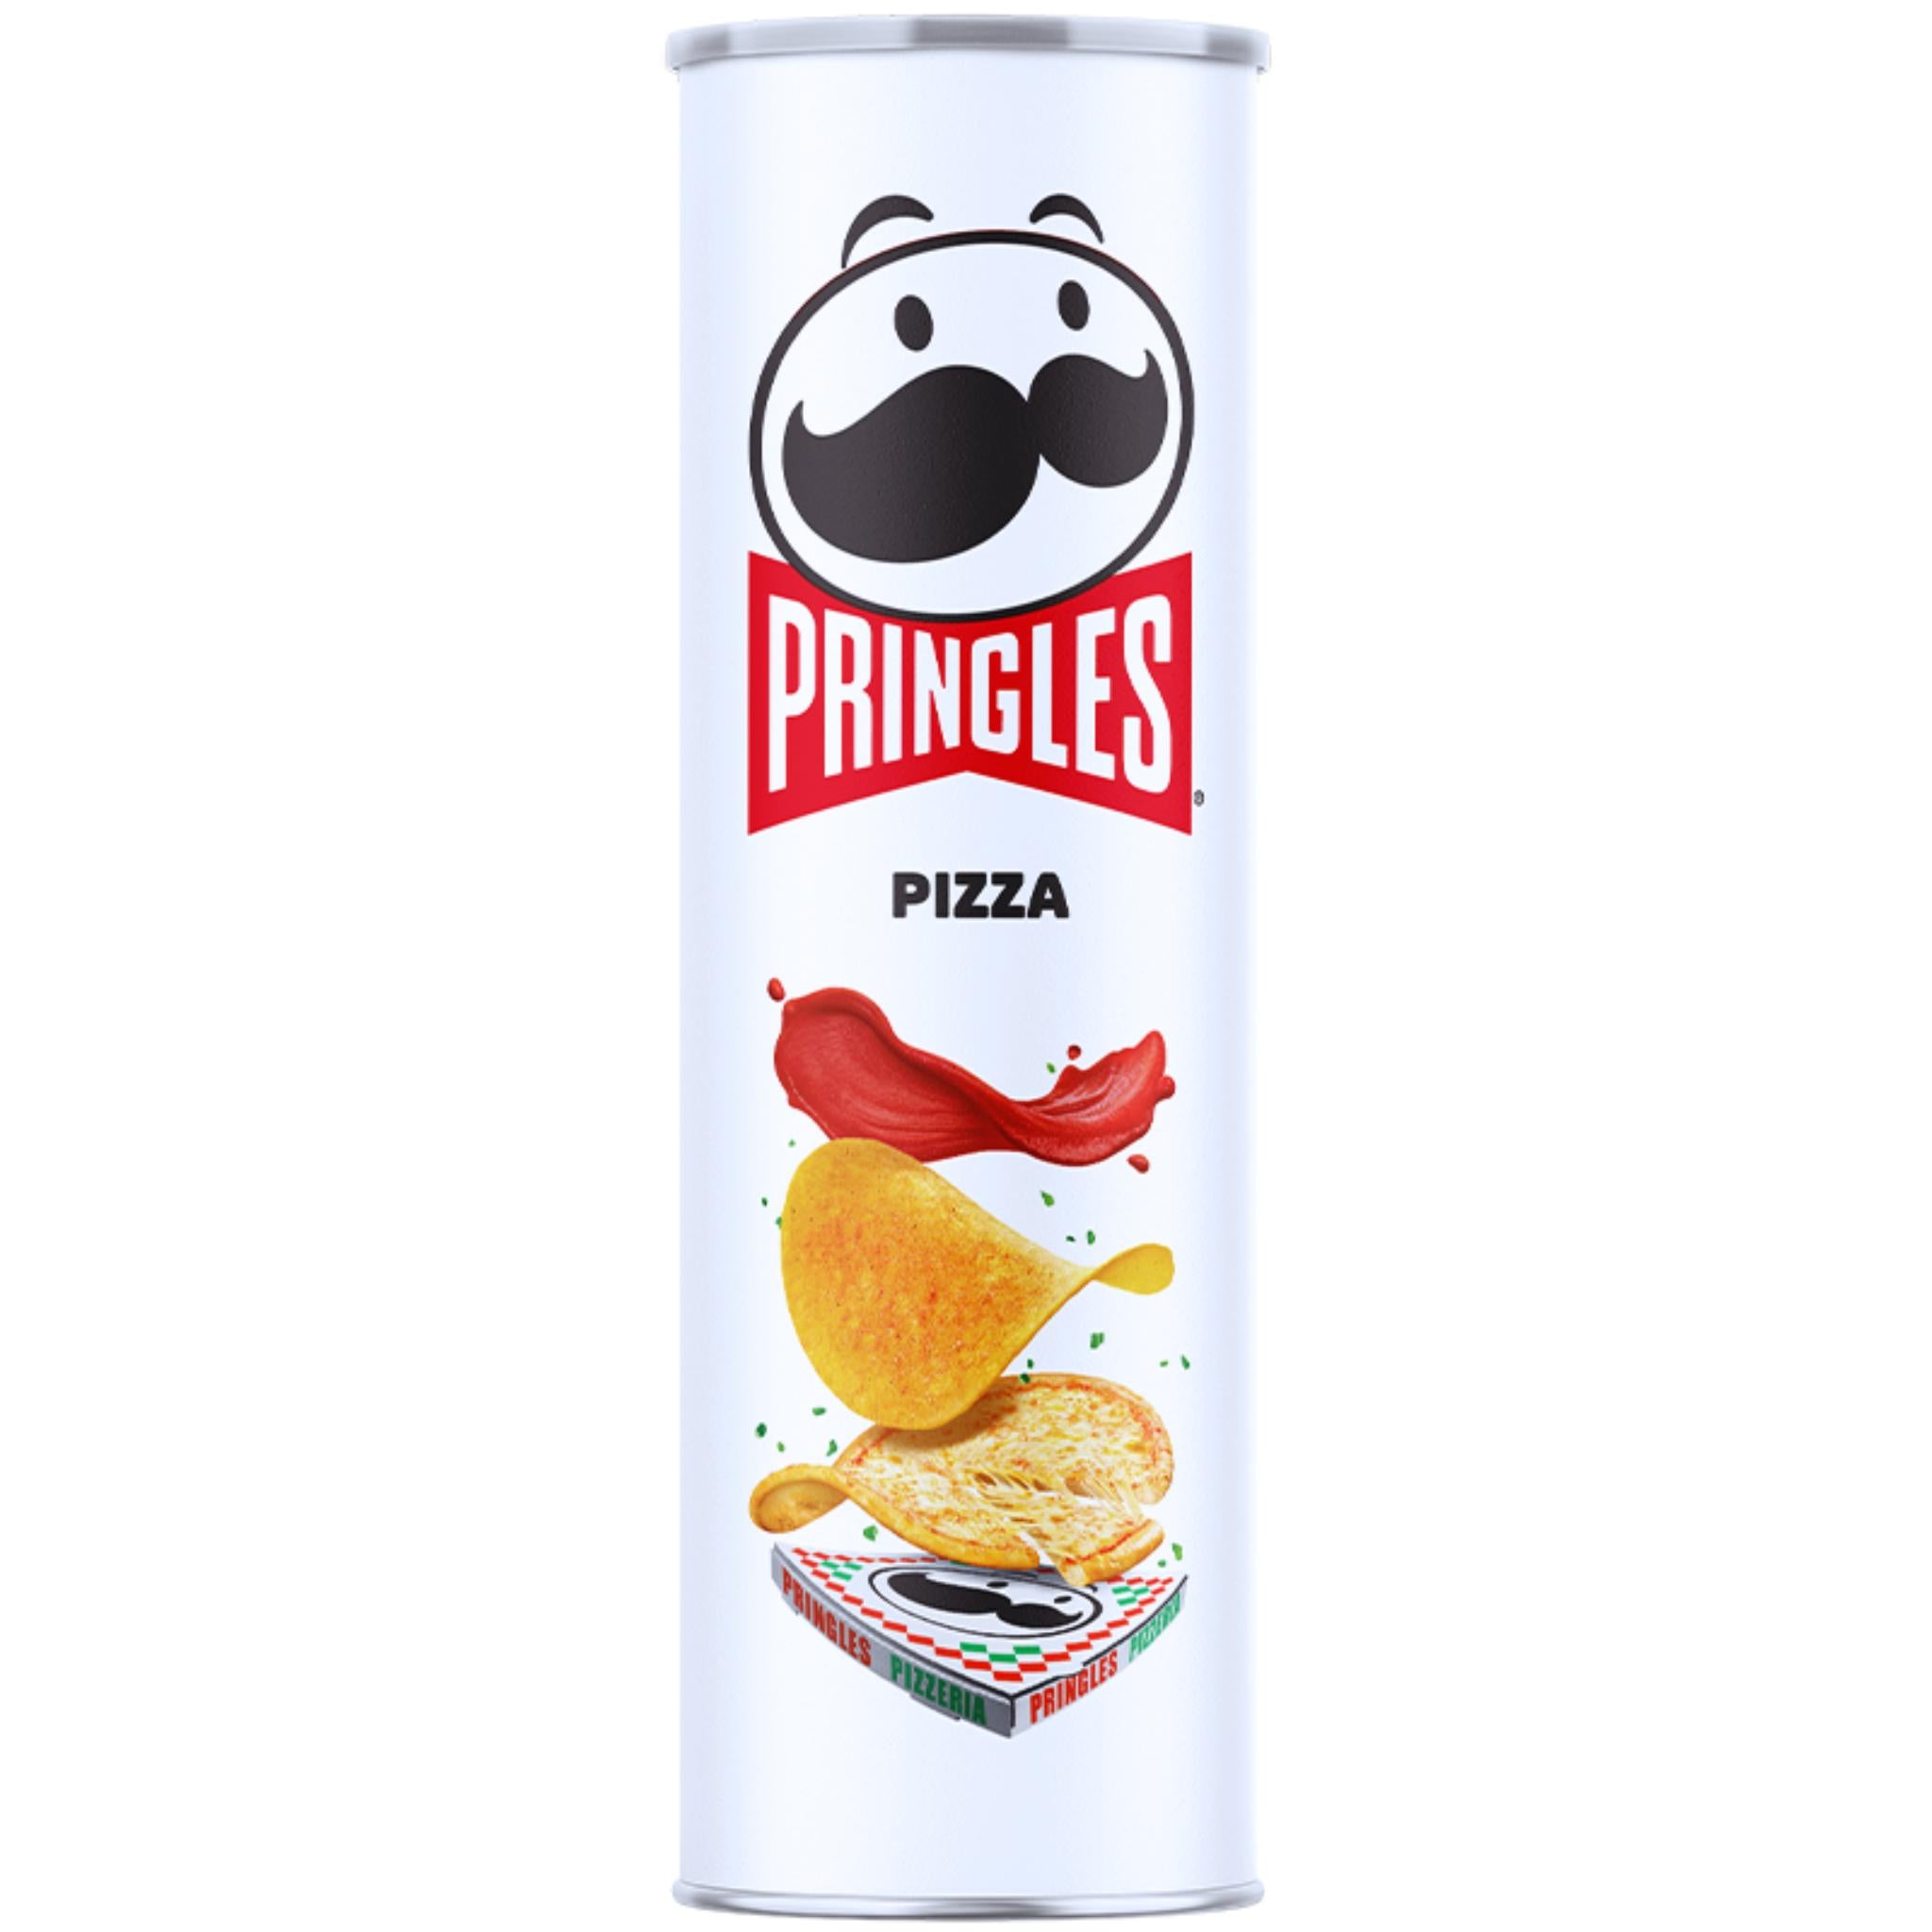 Pringles Pizza - 158g (USA)